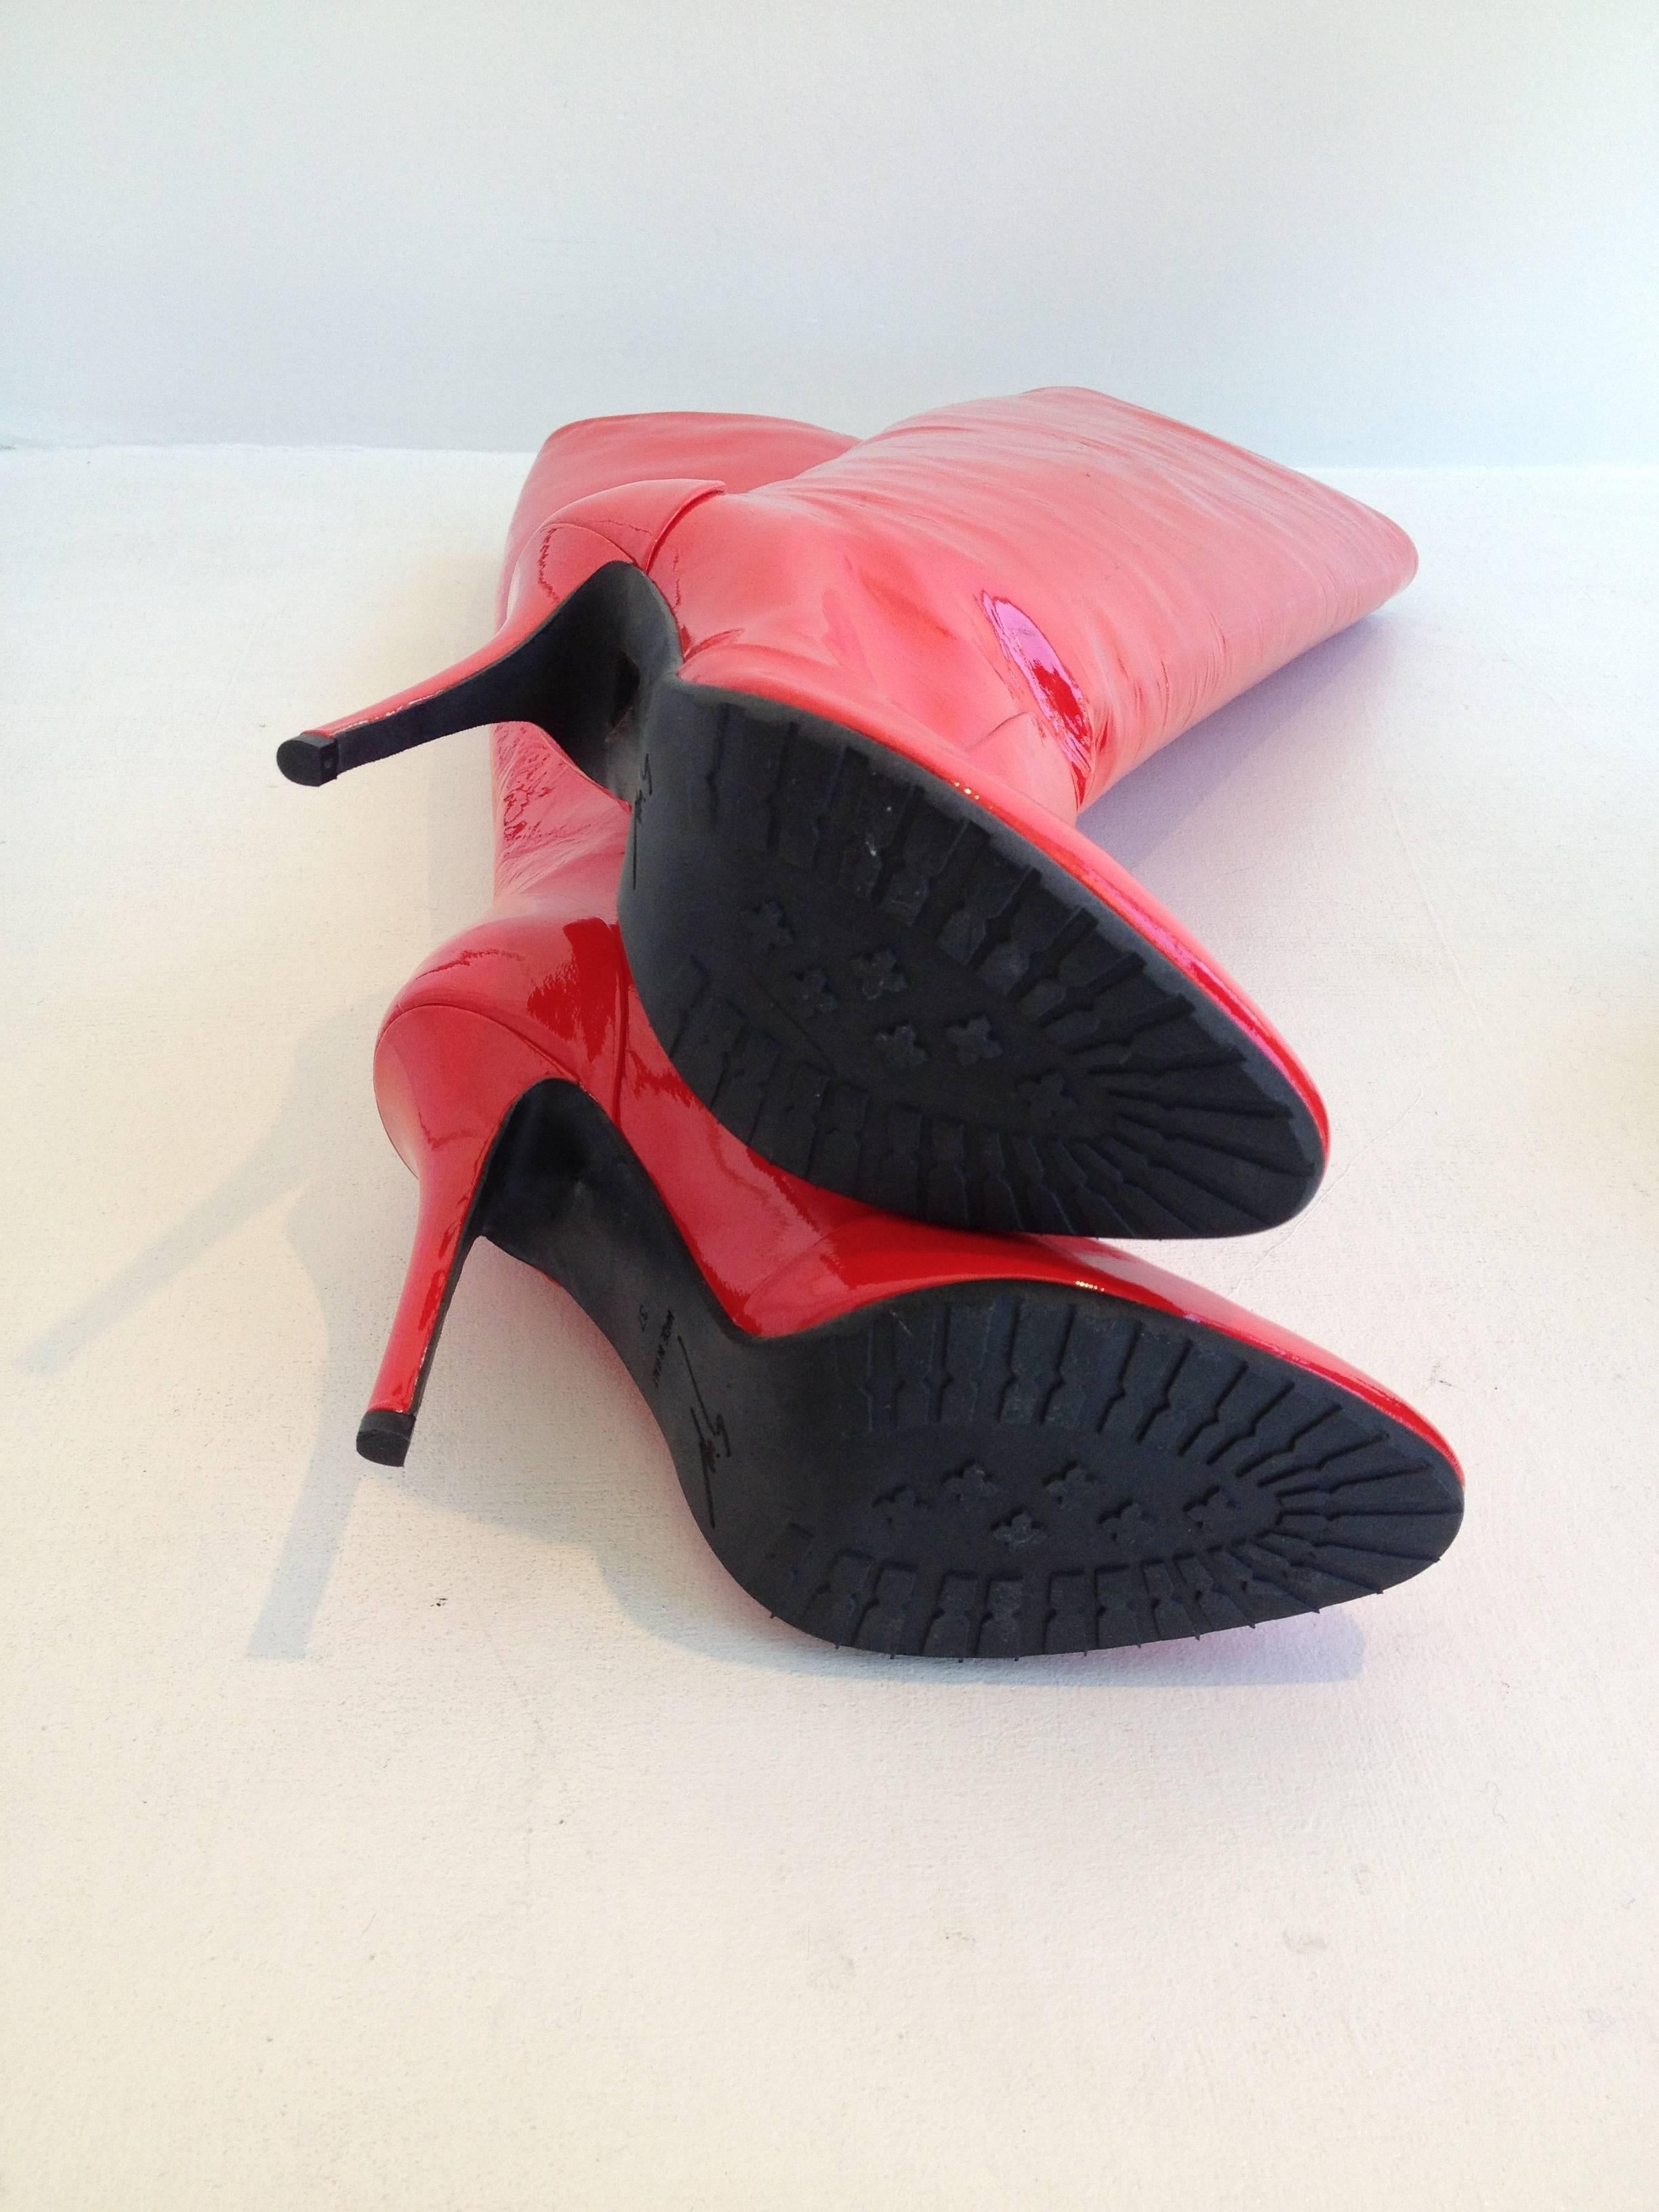 Women's Giuseppe Zanotti Red Patent Knee-High Boots Size 37 (6.5)